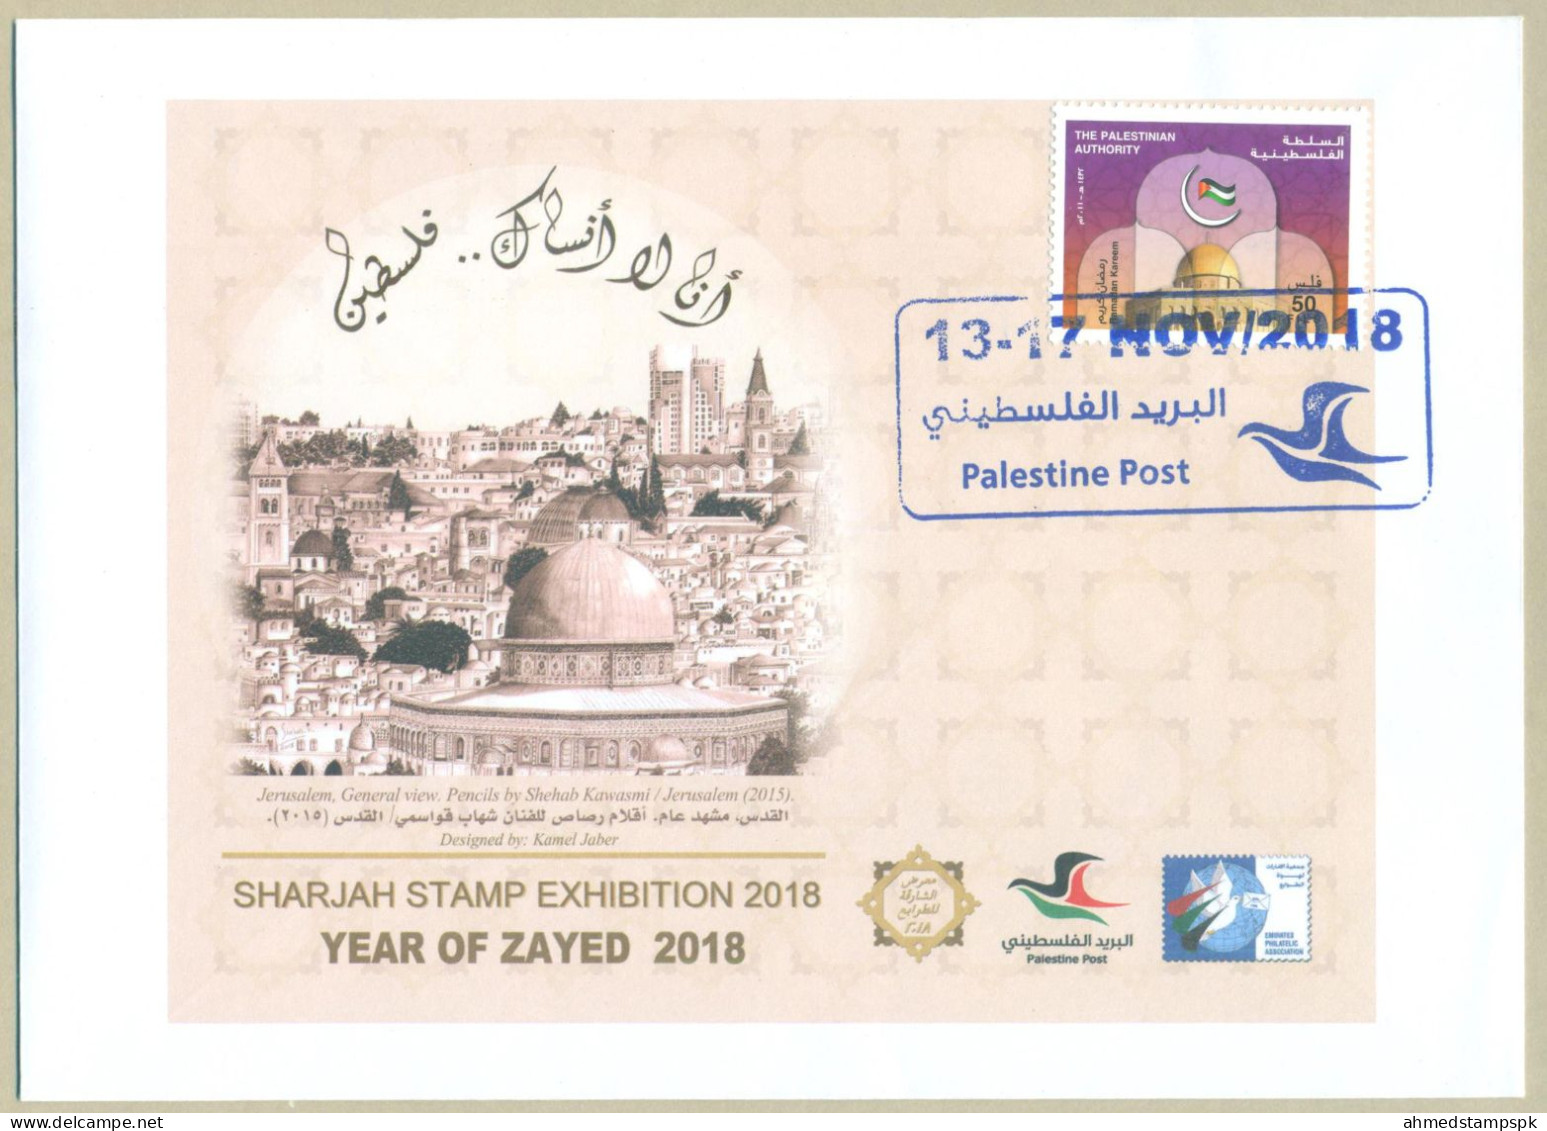 UAE UNITED ARAB EMIRATES SHARJAH EXHIBITION 13 - 17 NOV 2018 PALESTINE - Palestine